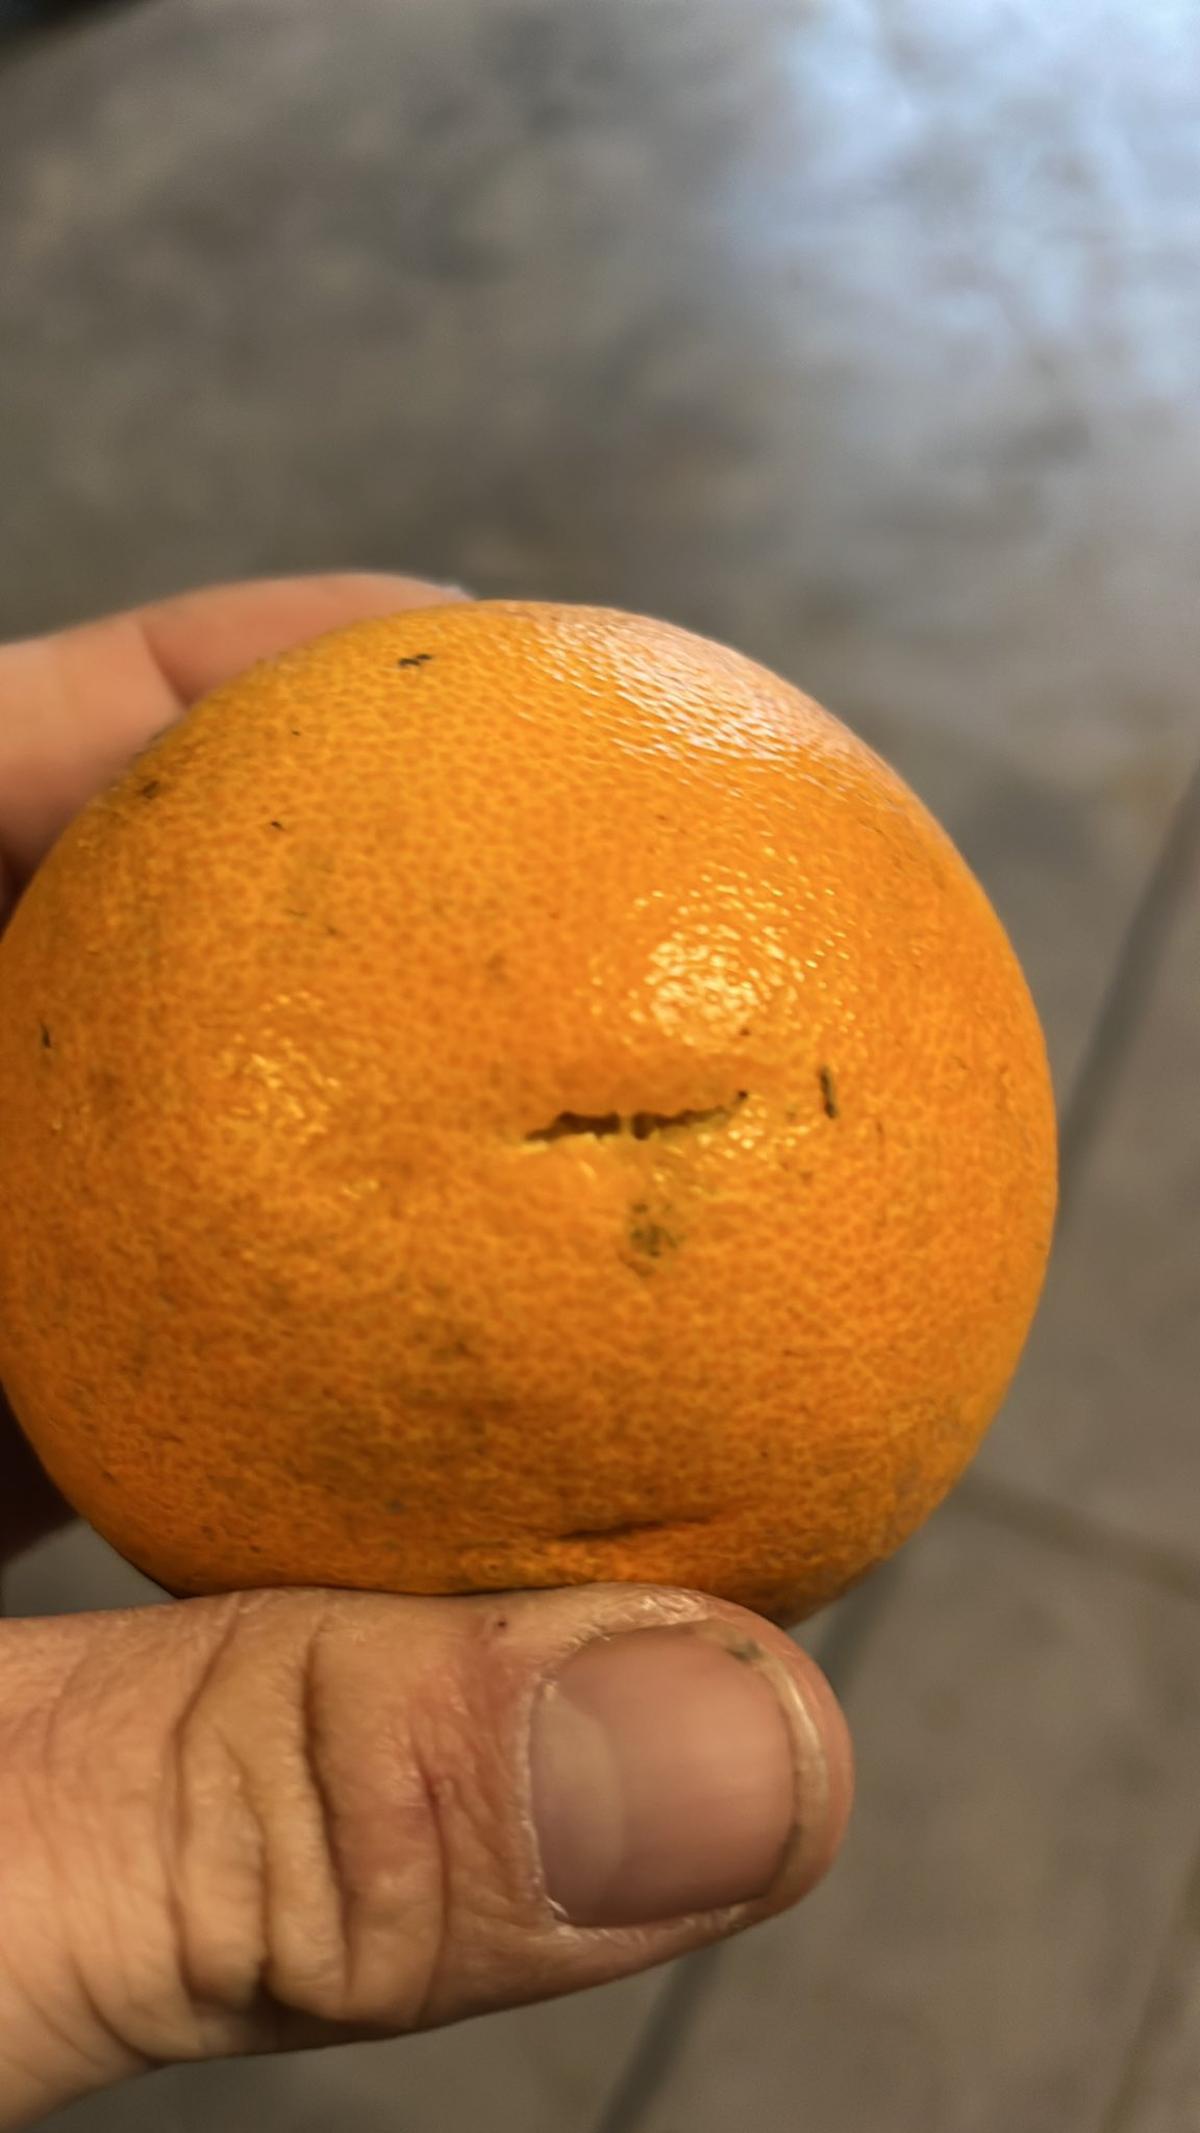 Una naranja dañada por la falta de lluvias.